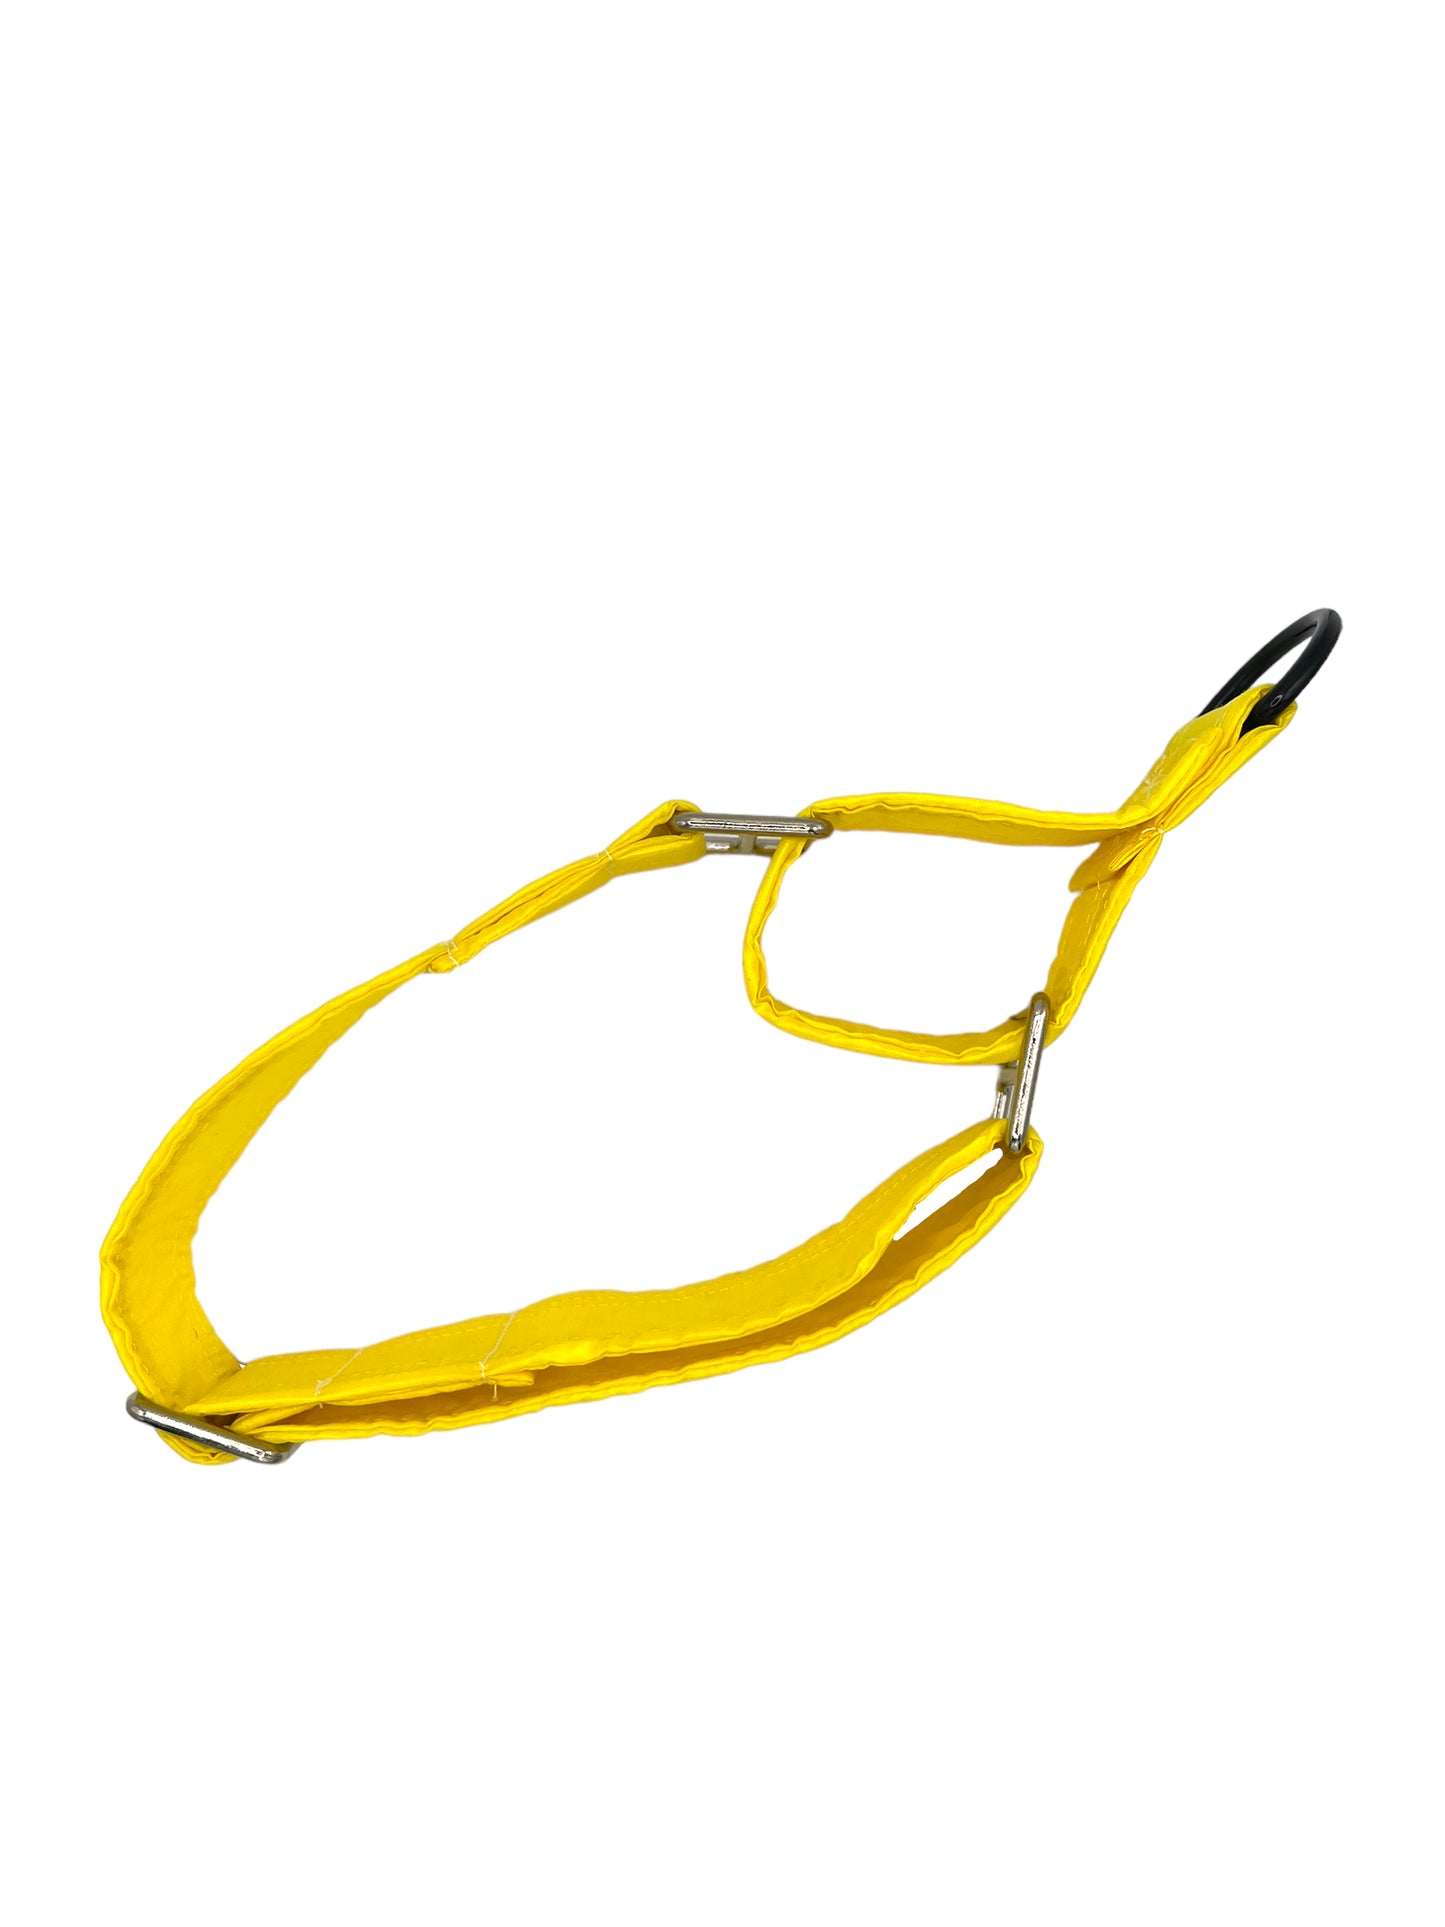 Yellow Waterproof Martingale Collar - 1.5 Inch